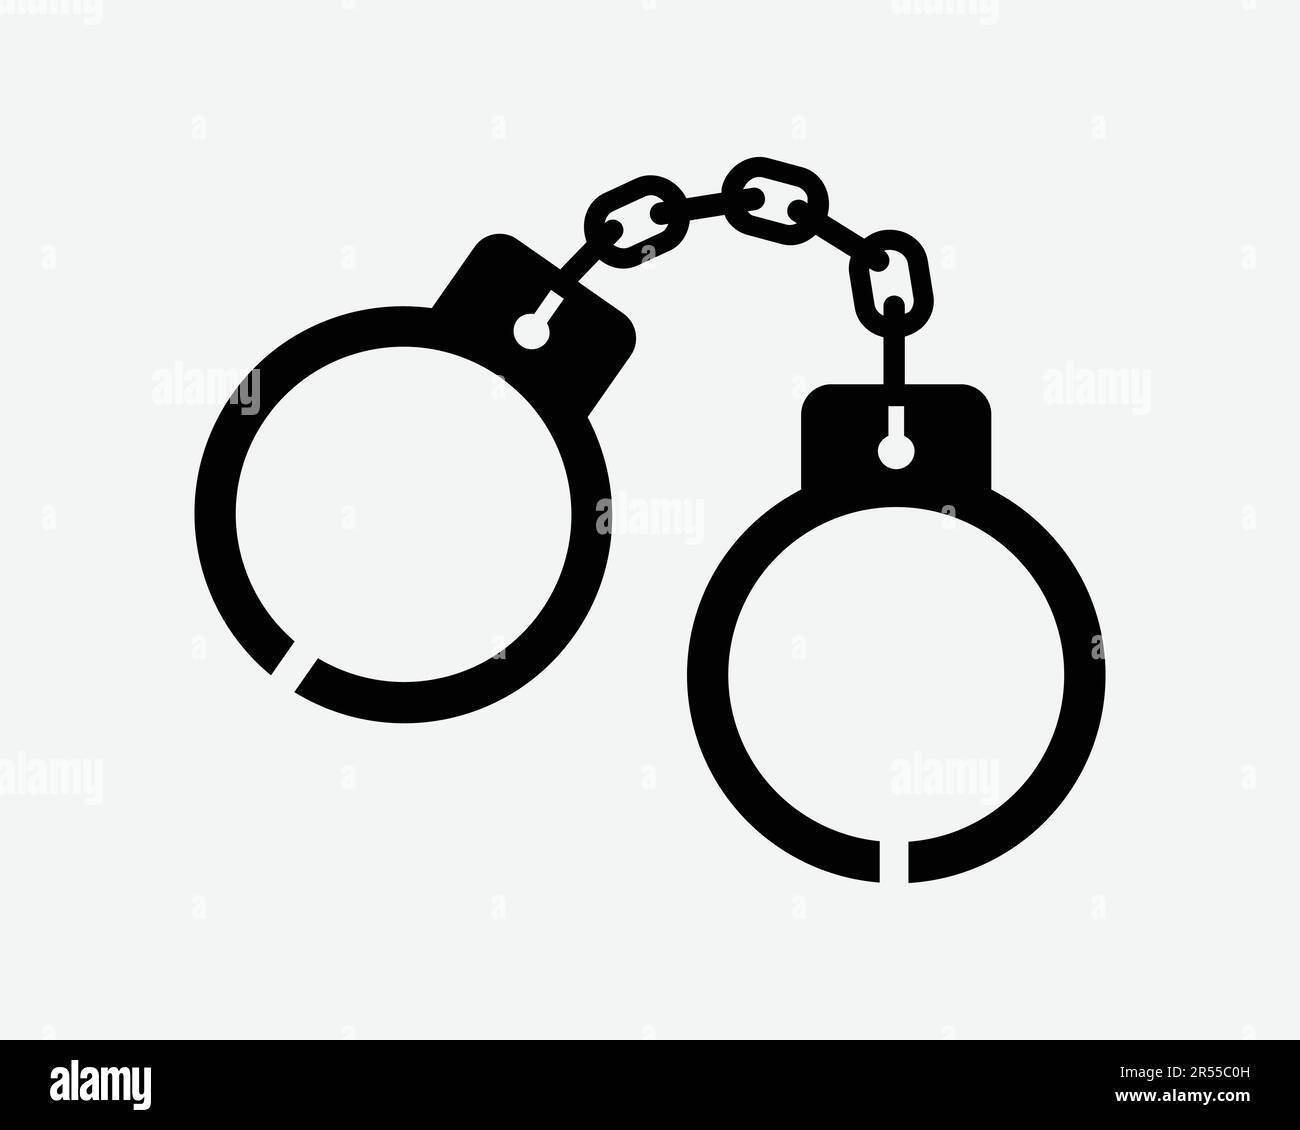 Handcuffs Icon Cuff Slavery Crime Criminal Justice Prison Jail Custody Bondage Slave Sign Symbol Black Artwork Graphic Illustration Clipart EPS Vector Stock Vector